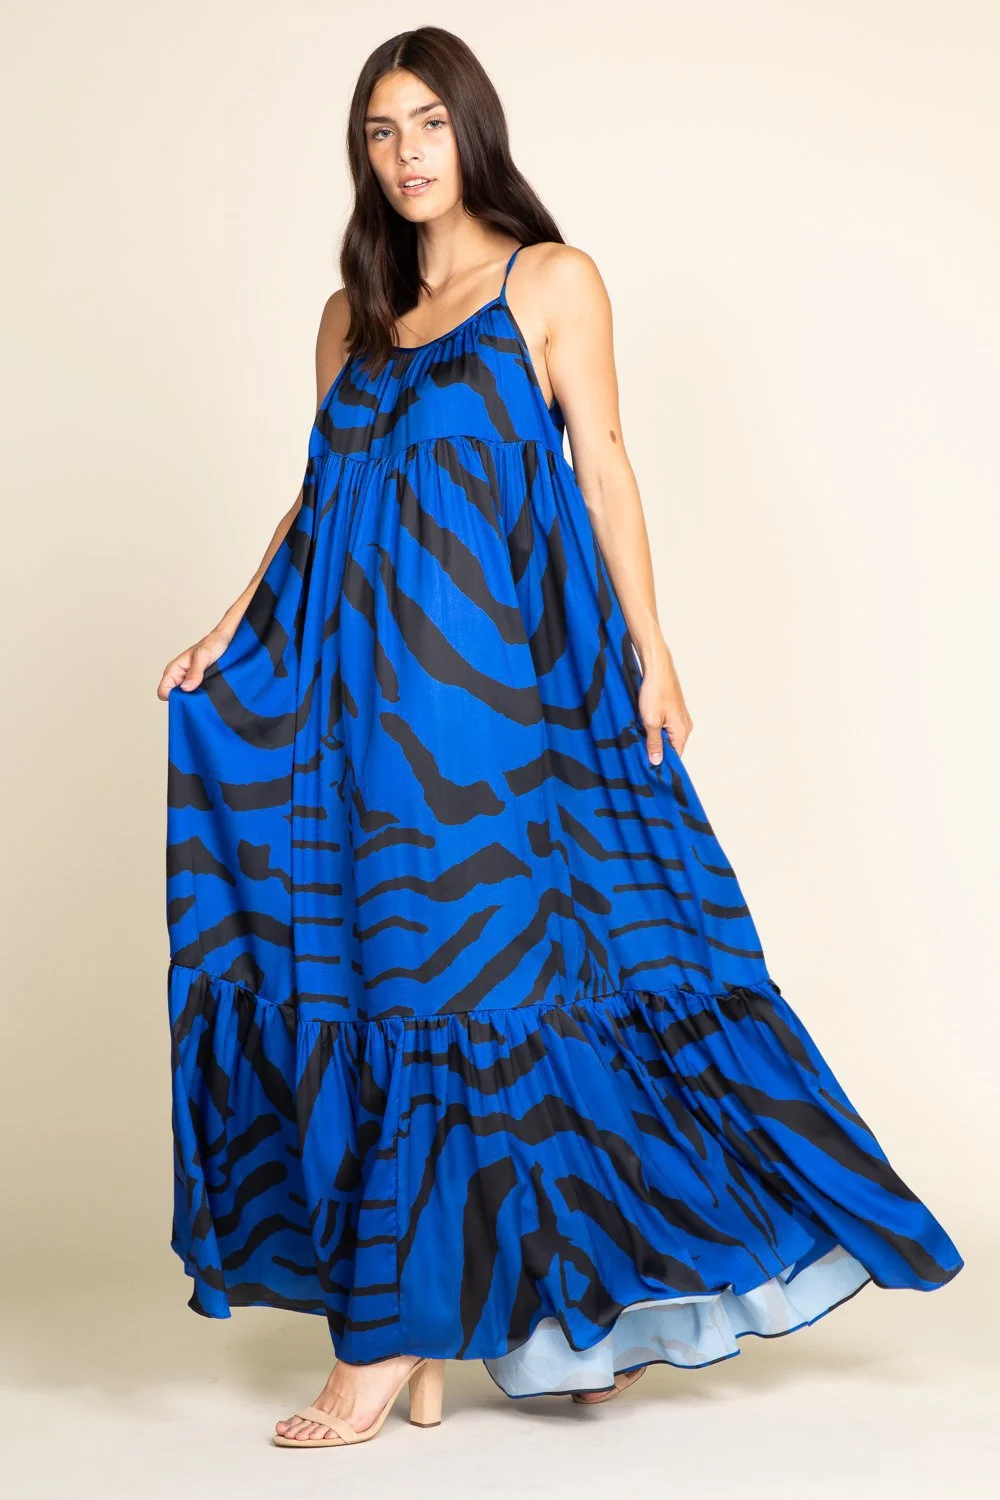 Royal Blue Striped Print Dress Summer 2021 Women Sling Ruffled Casual Long Loose Beach Dresses